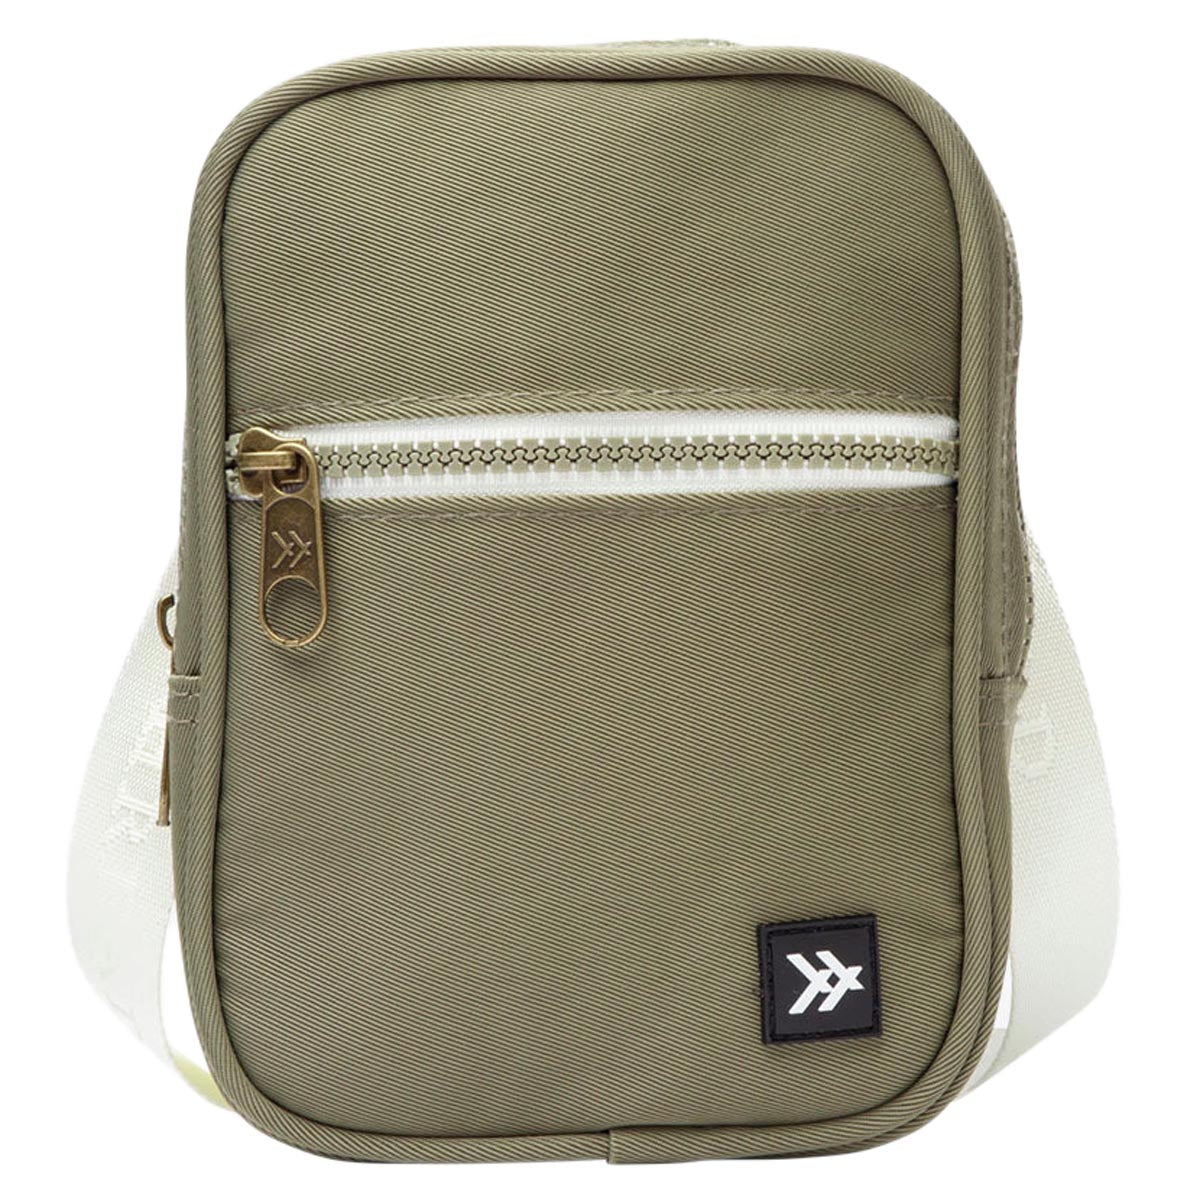 Thread Crossbody Bag - Scout image 1